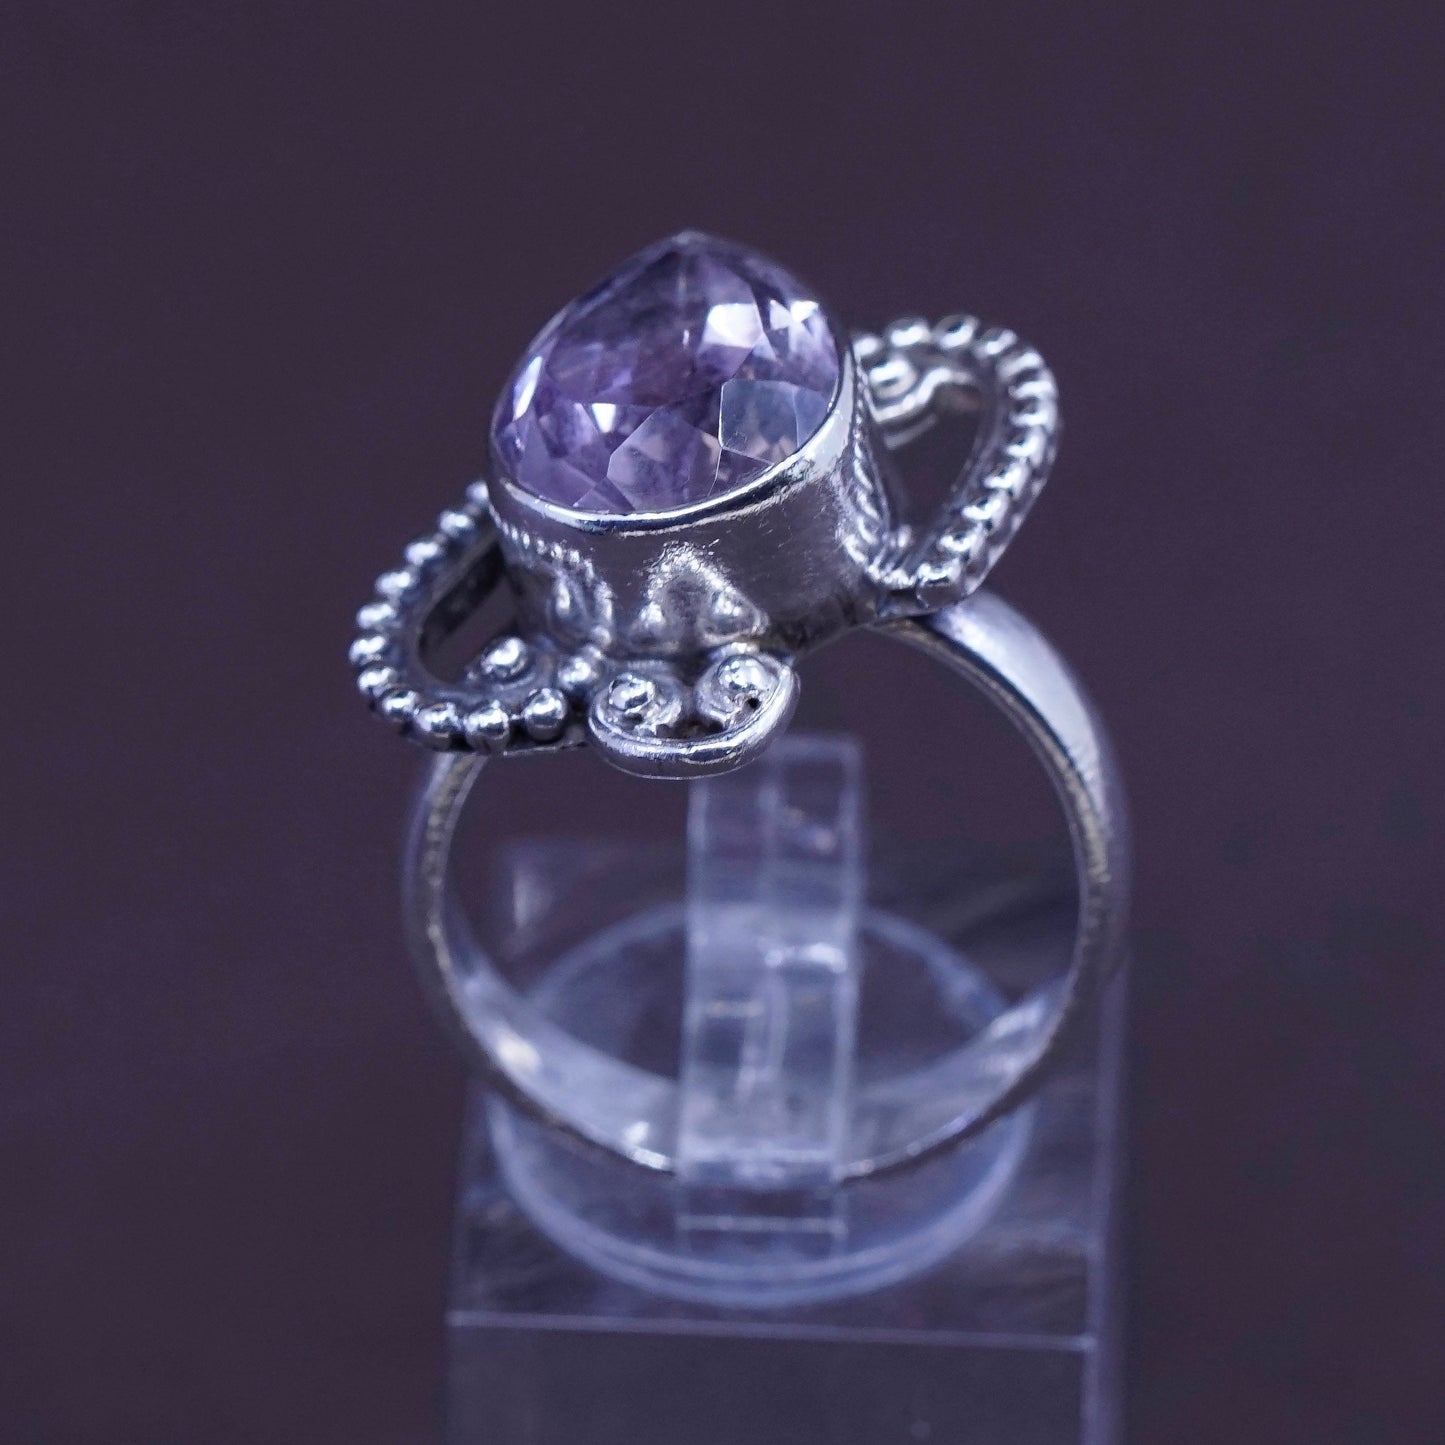 Size 8.5, vtg Sterling 925 silver handmade ring w/ teardrop amethyst N beads